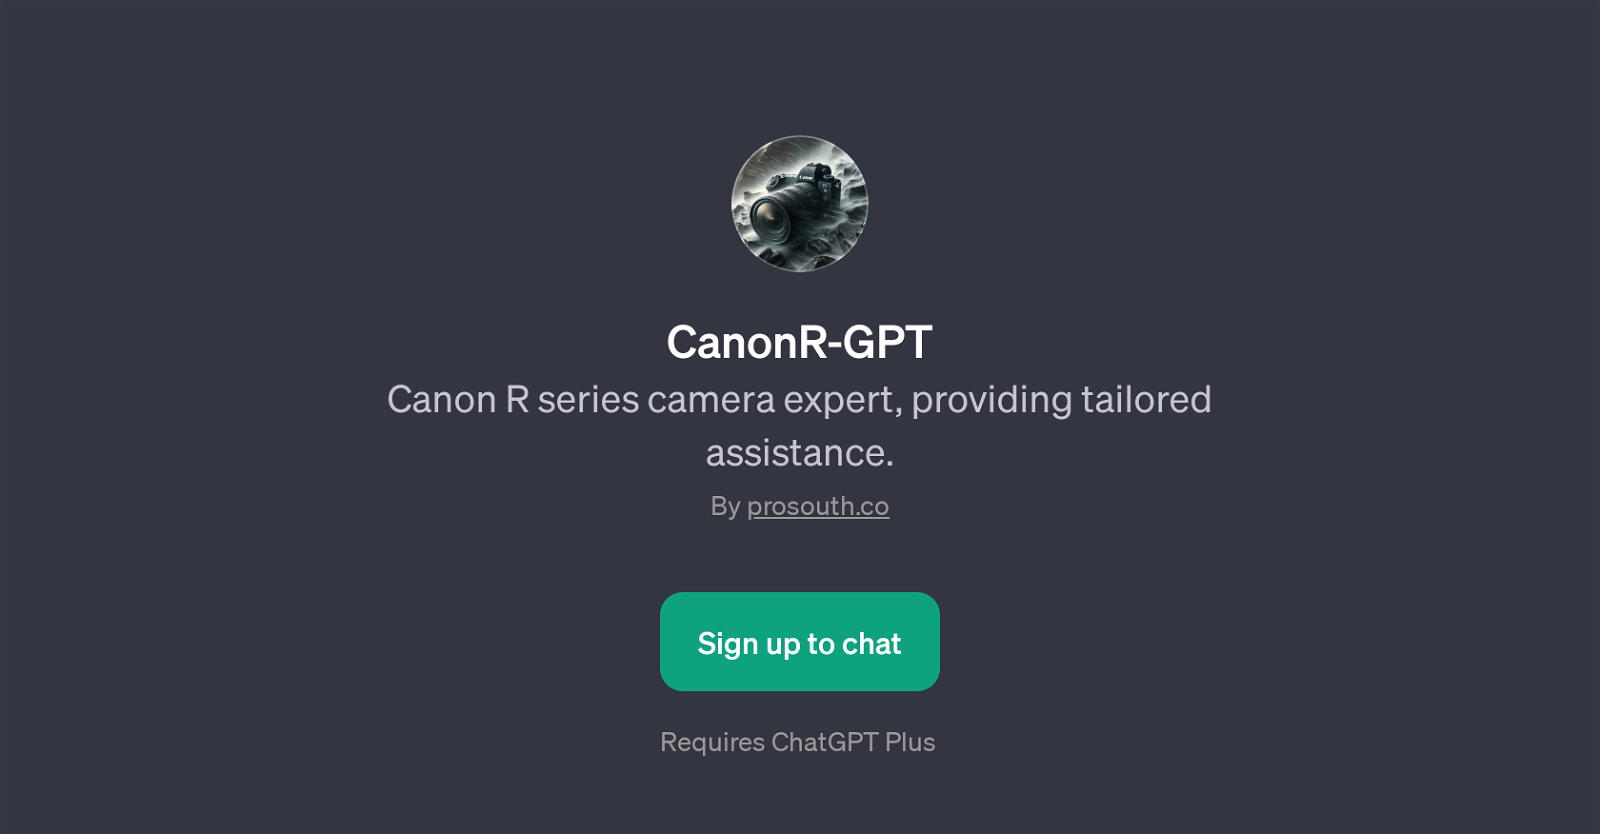 CanonR-GPT website